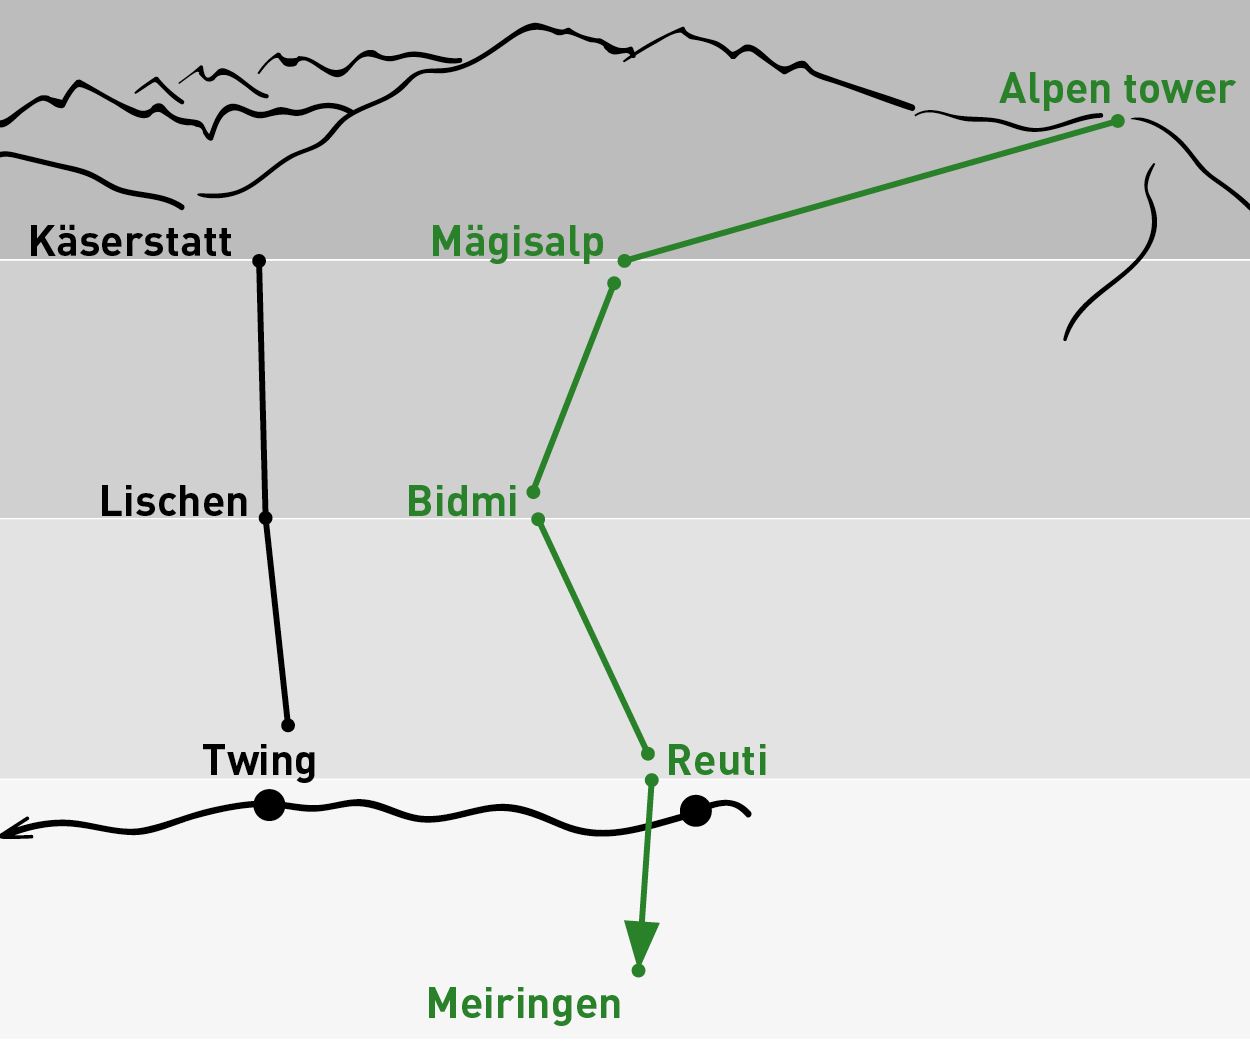 Alpen tower - Meiringen | One-way trip